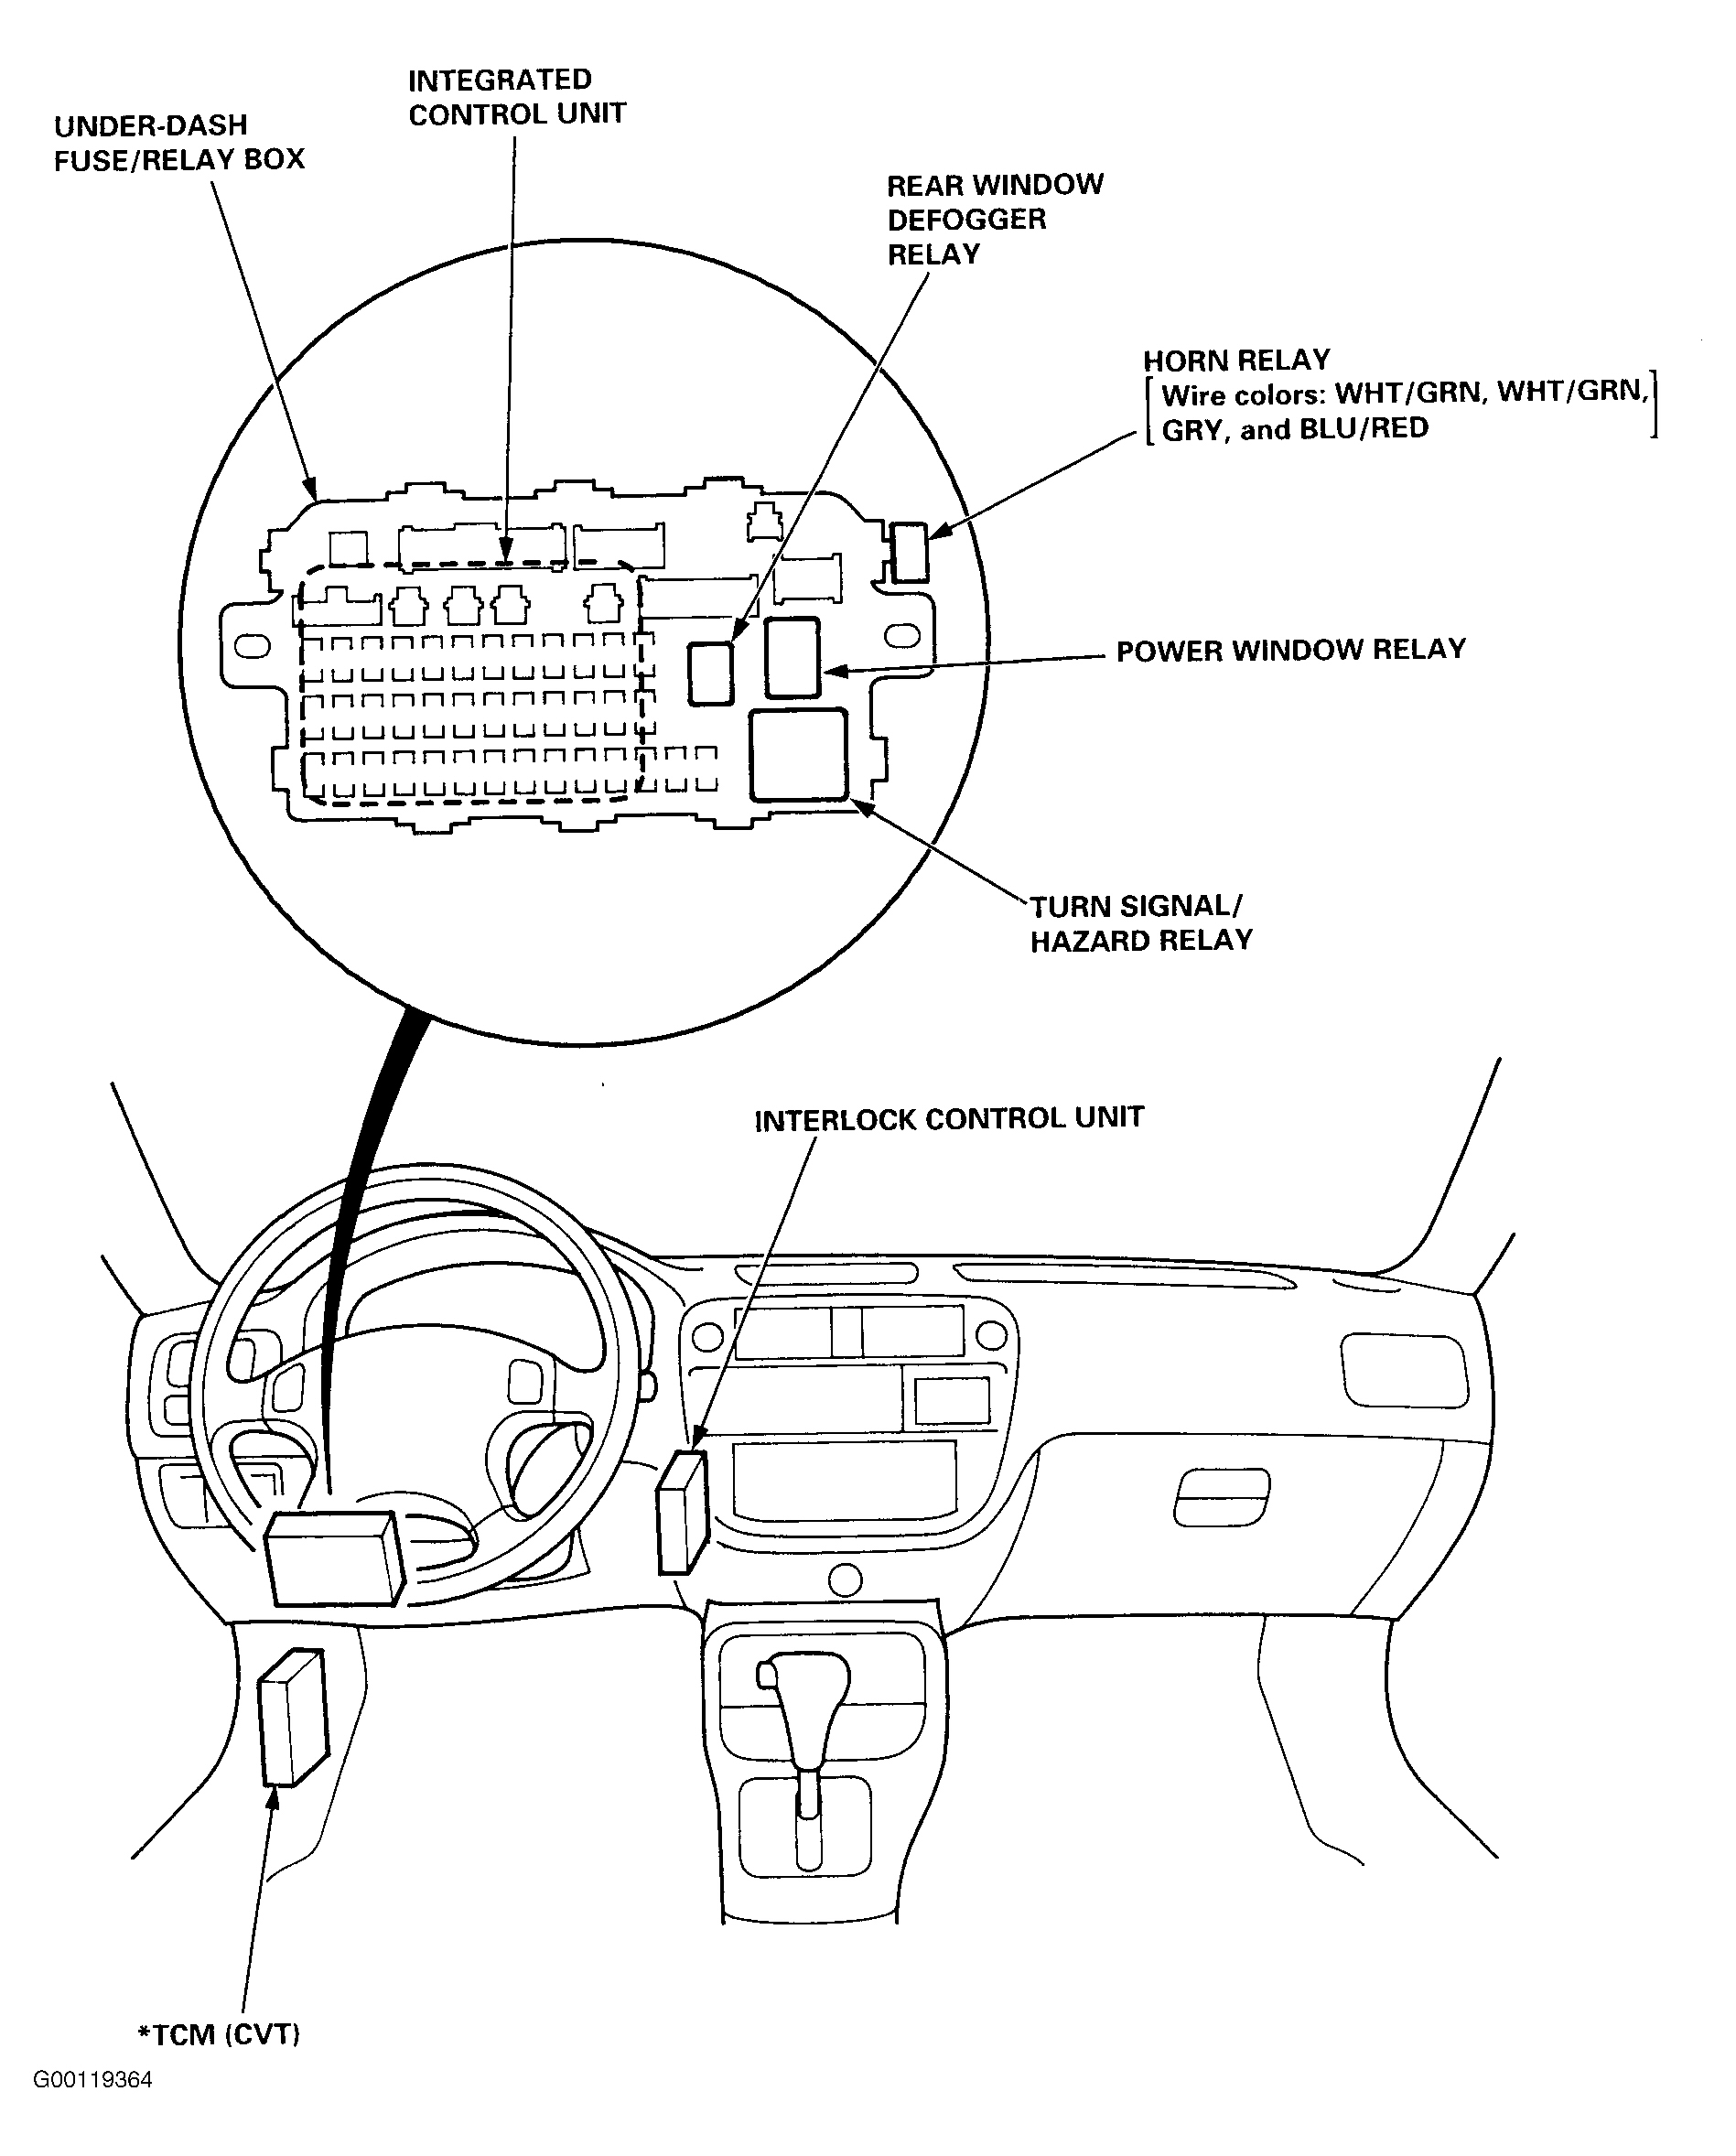 Honda Civic HX 1998 - Component Locations -  Locating Under-Dash Fuse/Relay Box (1996-97)